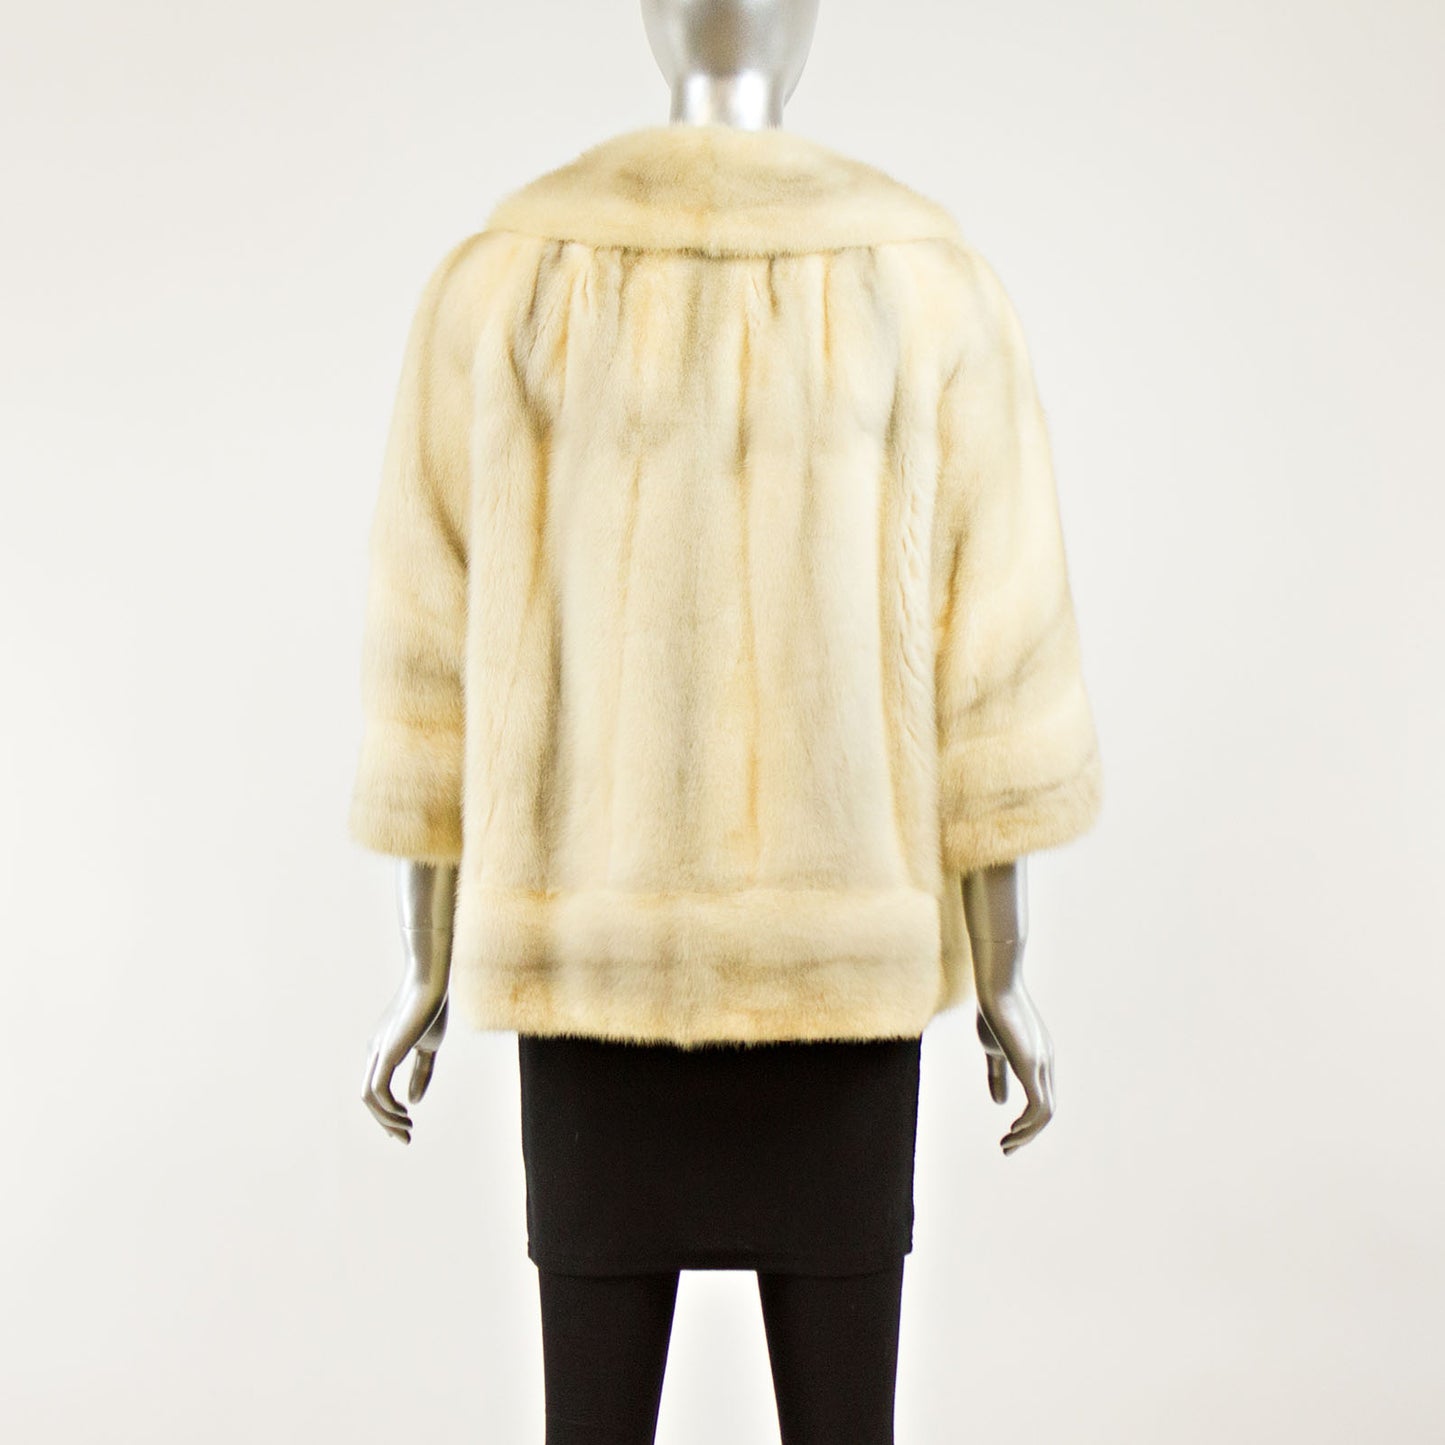 Pearl Mink Jacket- Size M-L (Vintage Furs)